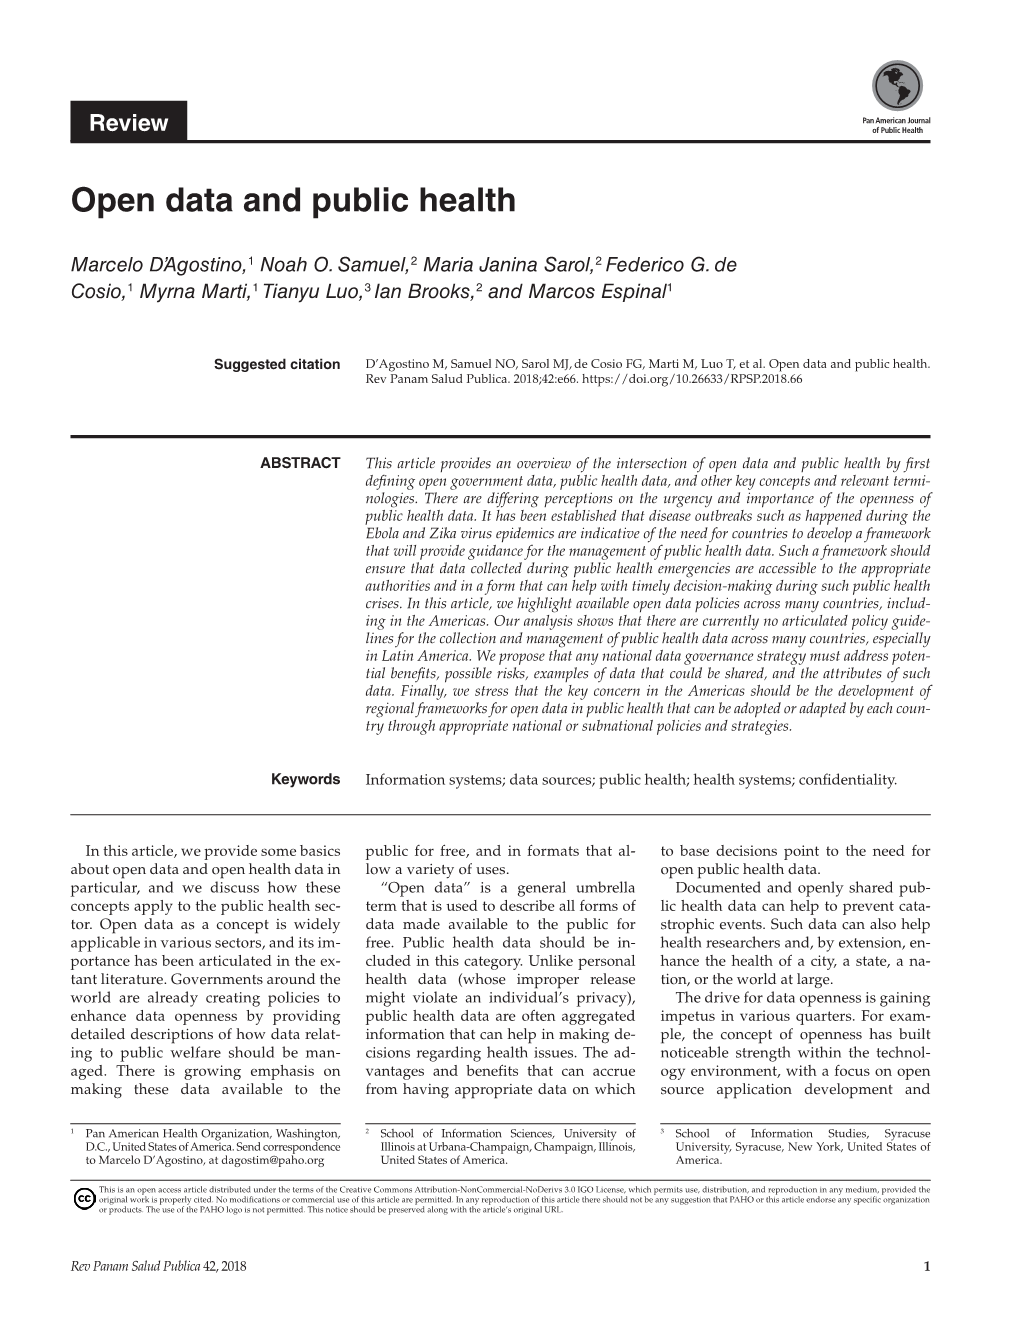 Open Data and Public Health